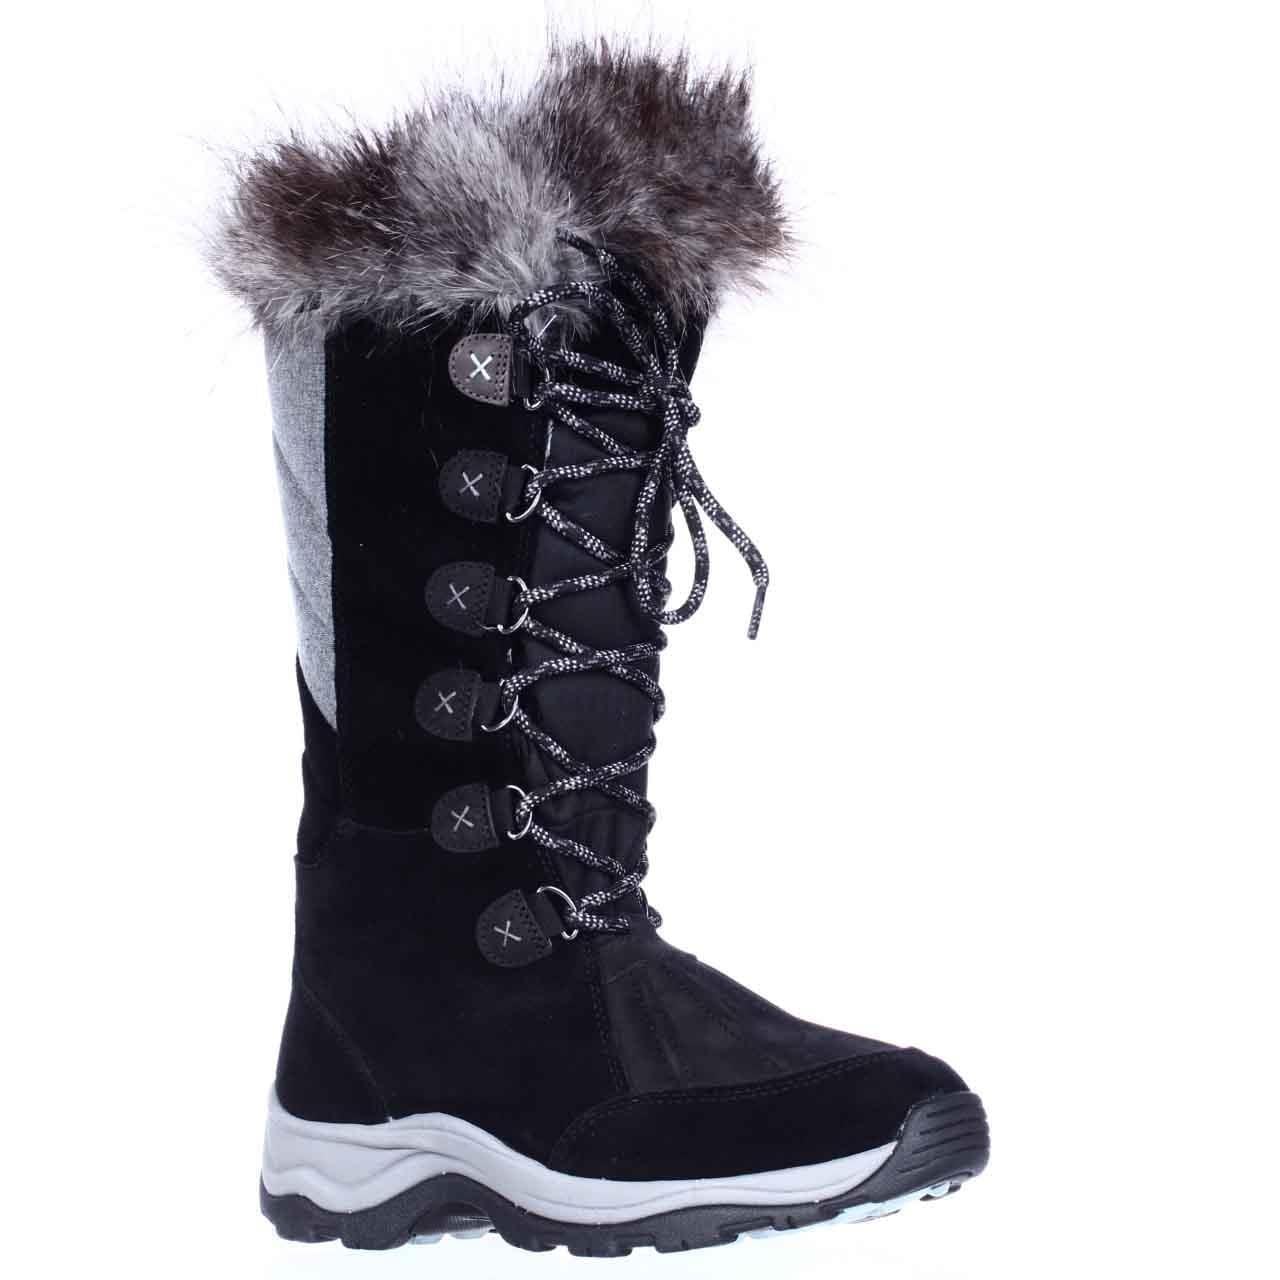 clarks fleece lined boots